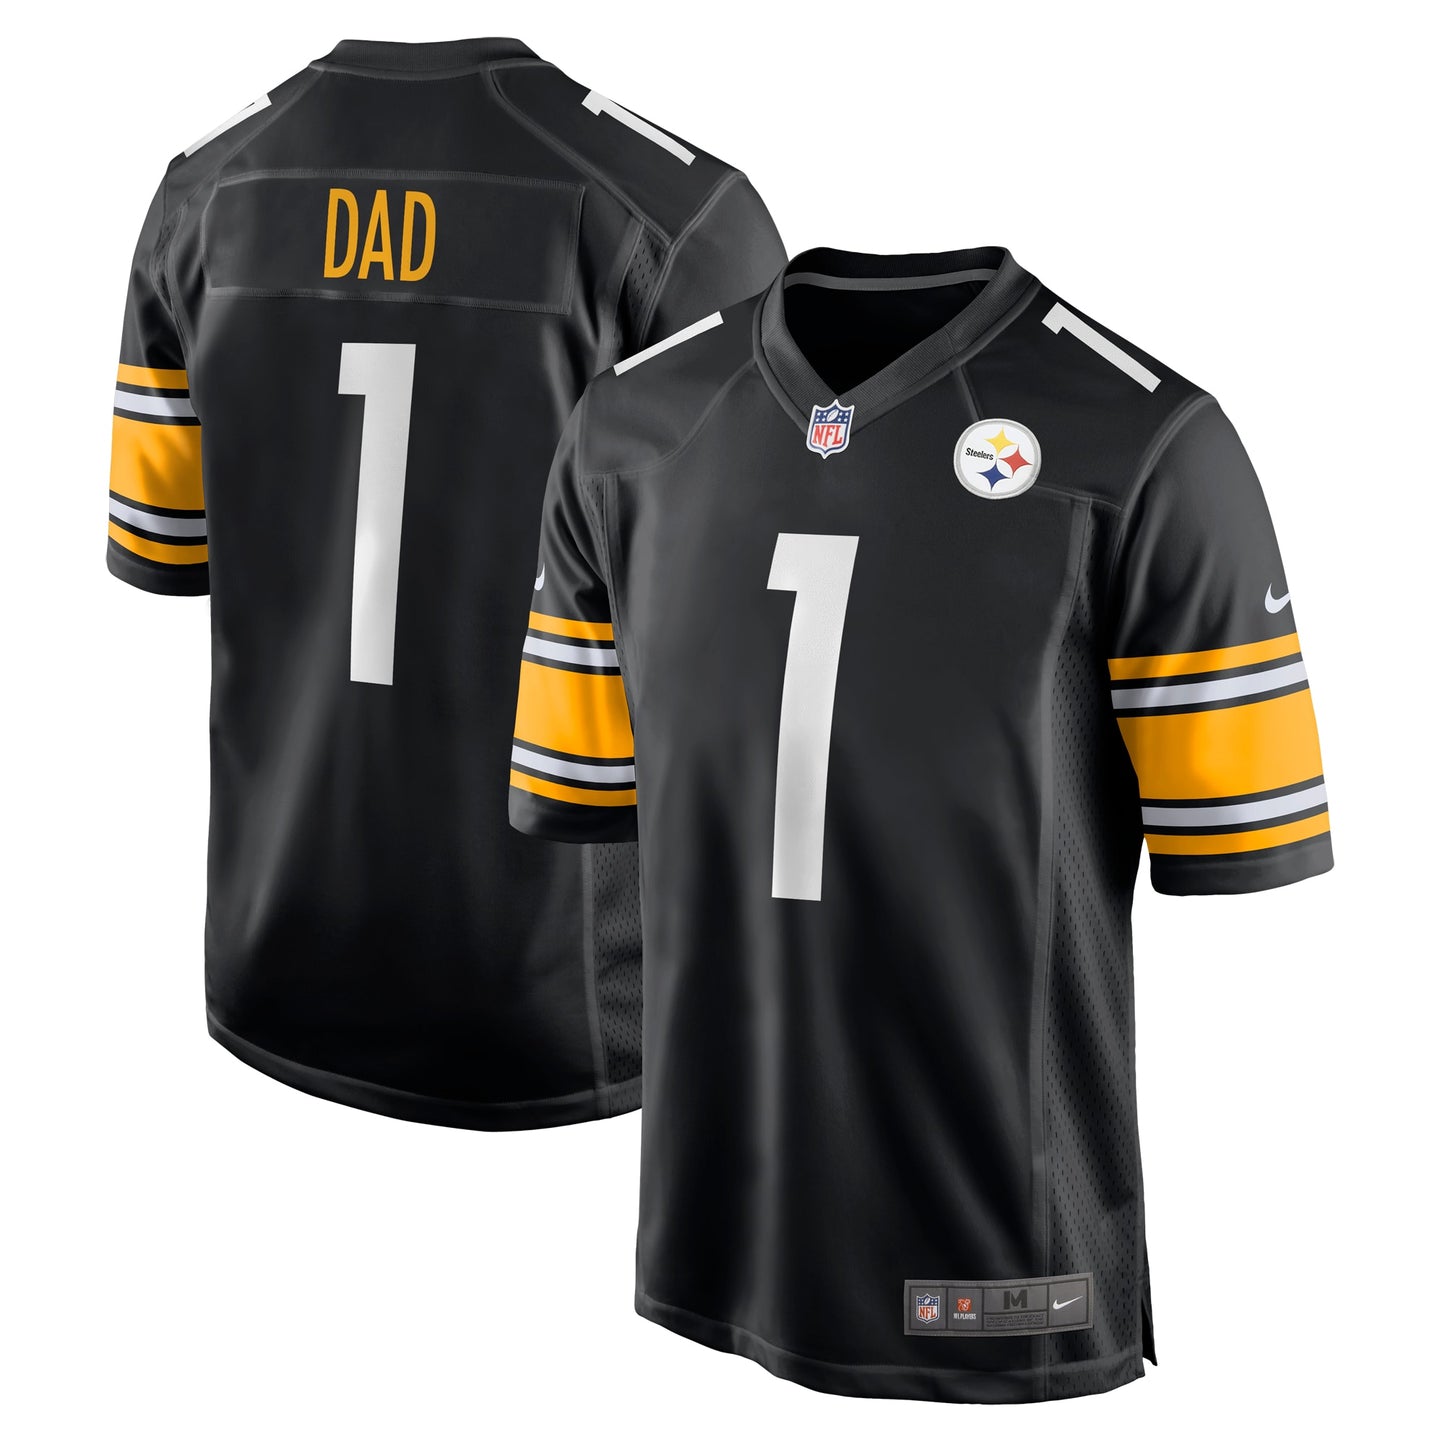 Number 1 Dad Pittsburgh Steelers Nike Game Jersey - Black